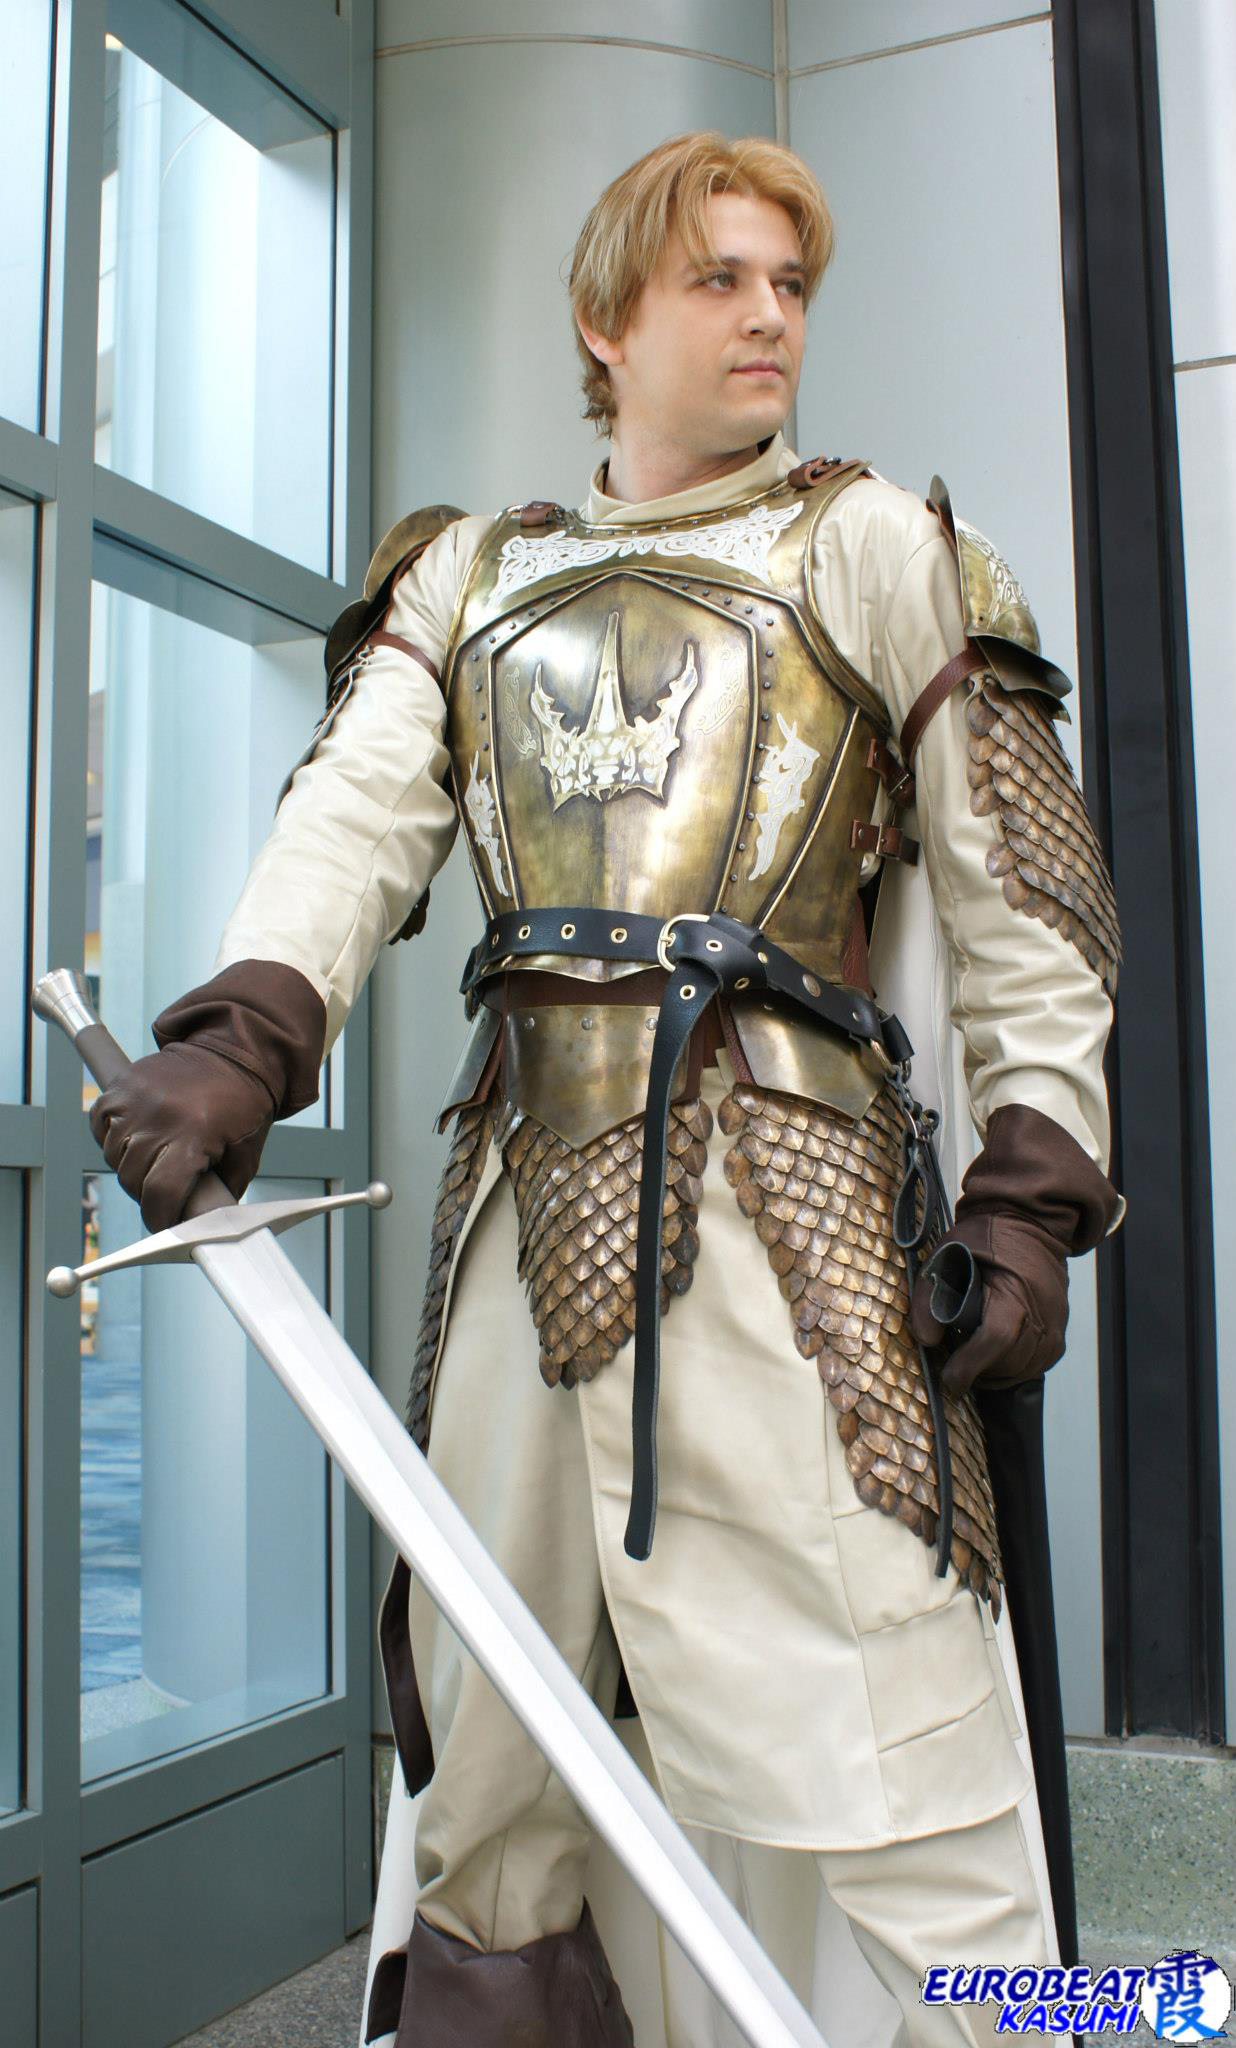 Jaime Lannister Armor Costume